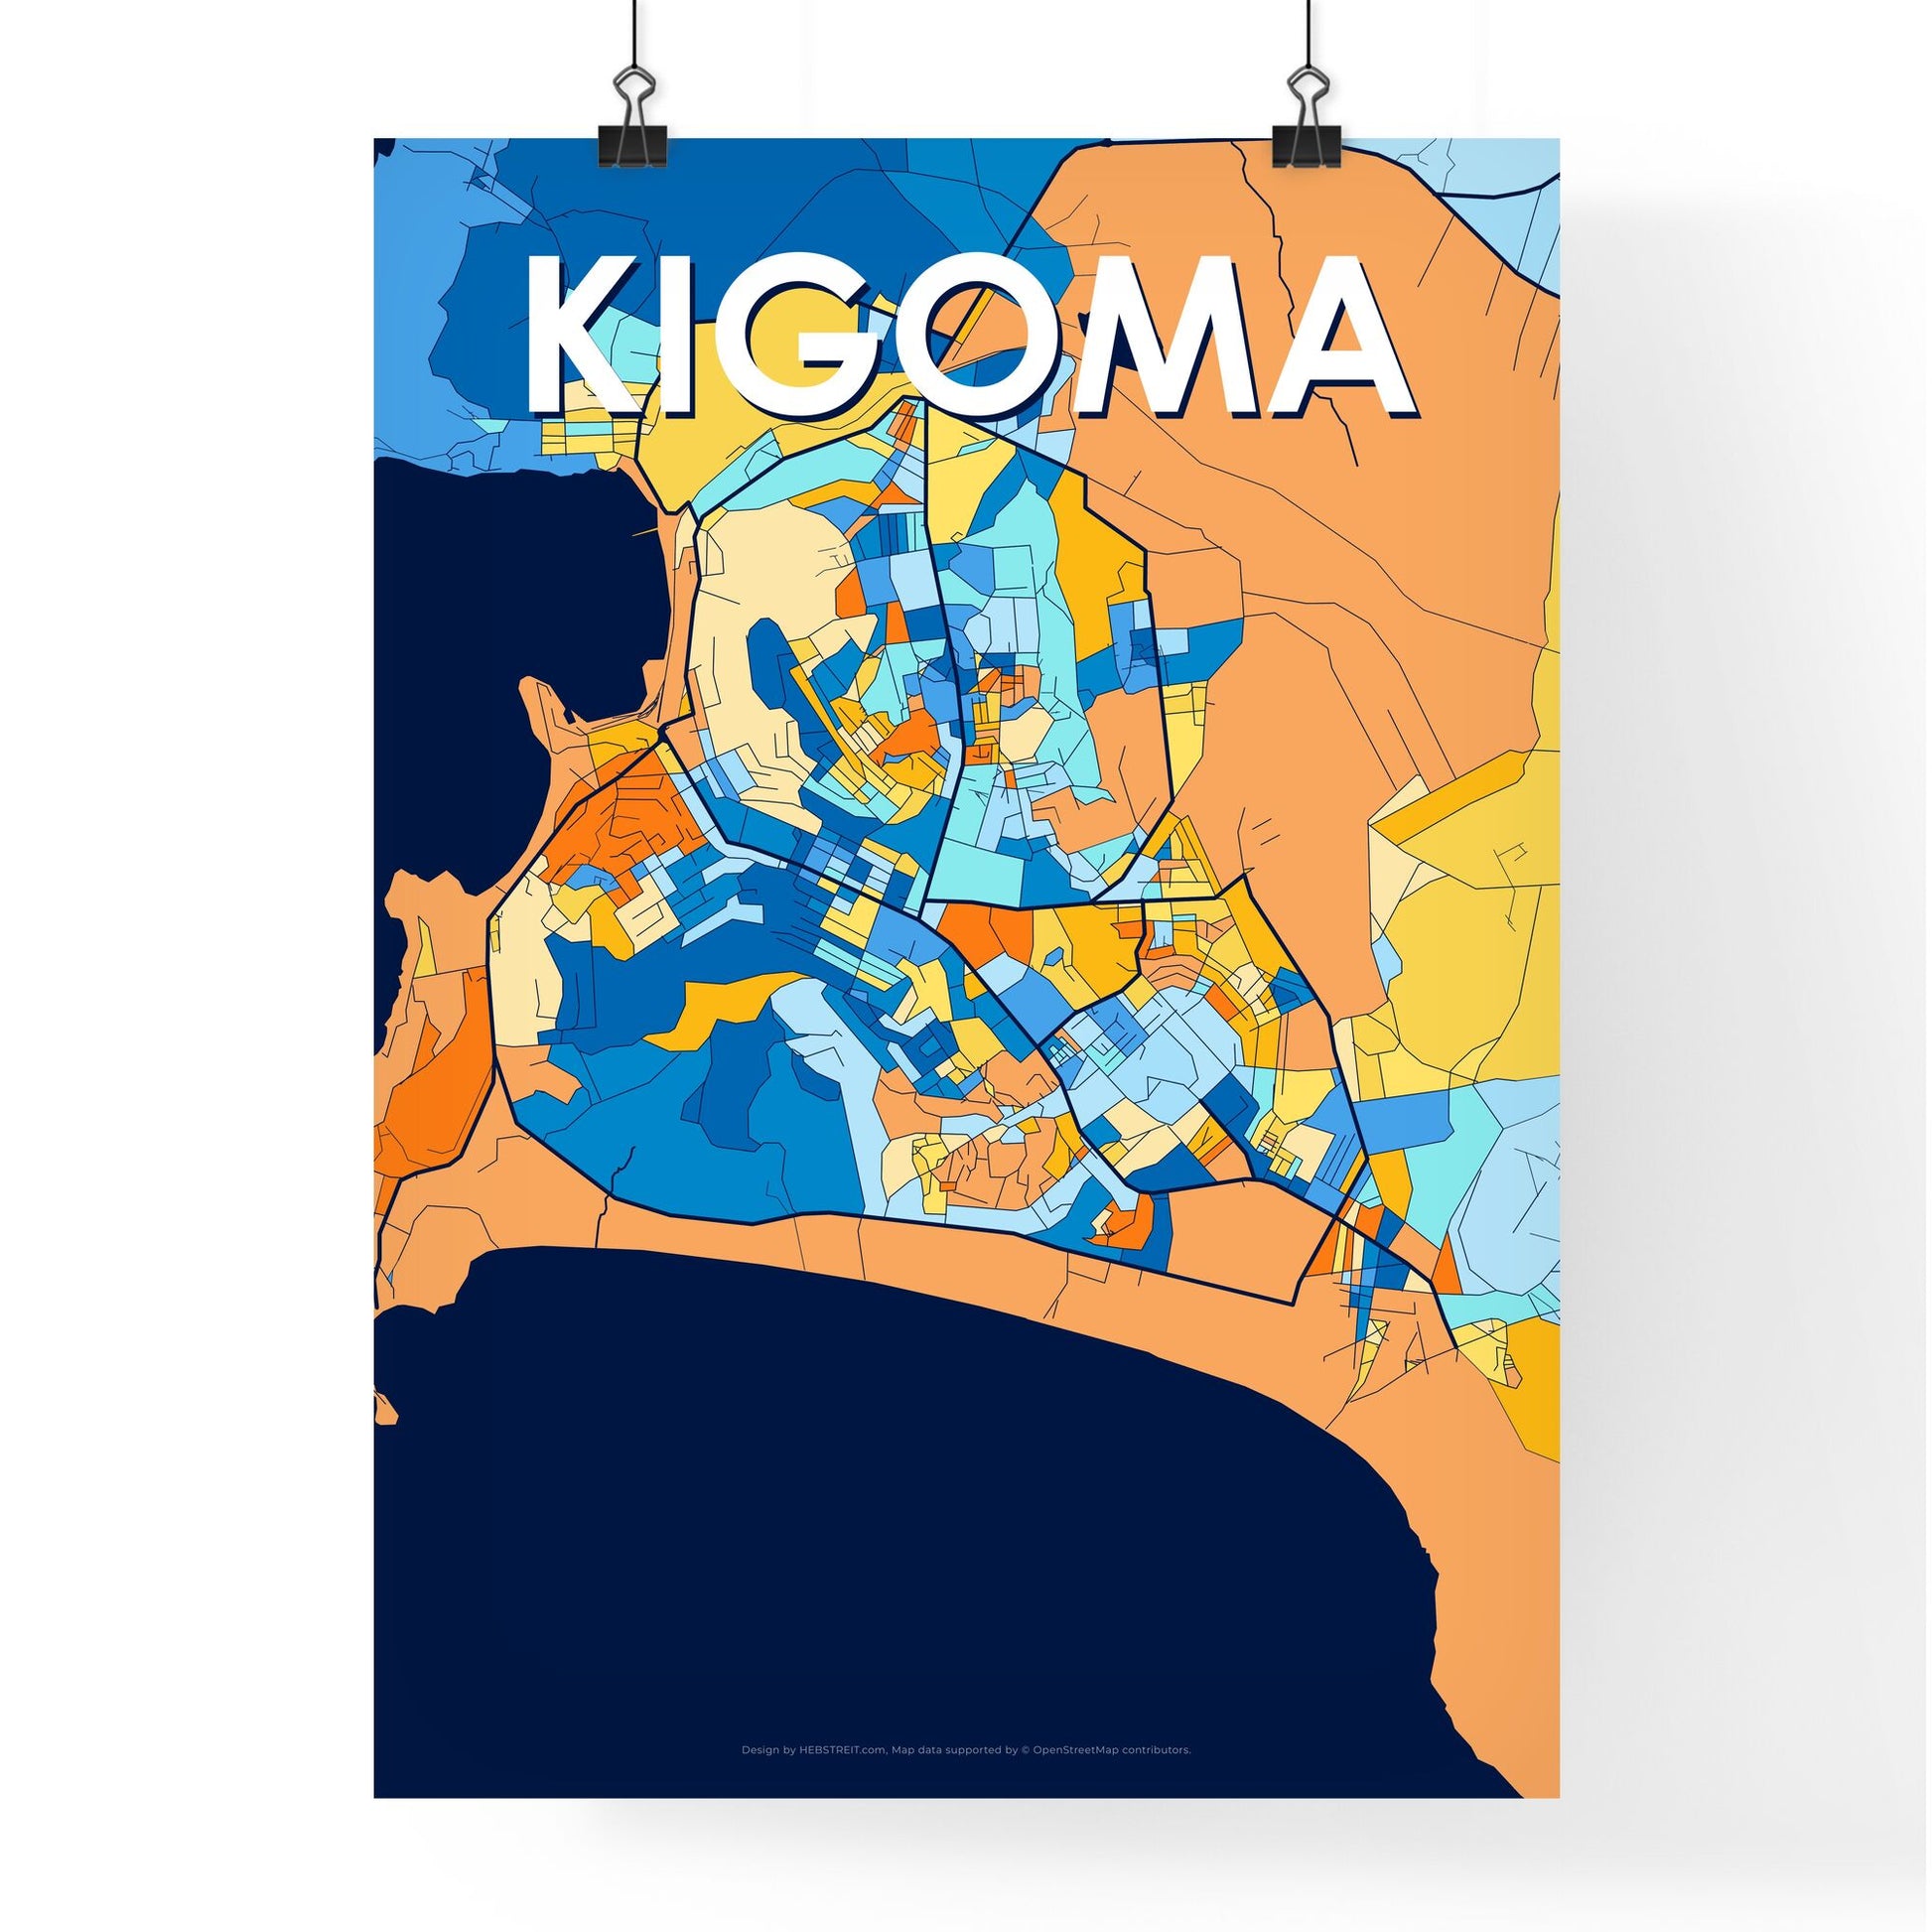 KIGOMA TANZANIA Vibrant Colorful Art Map Poster Blue Orange